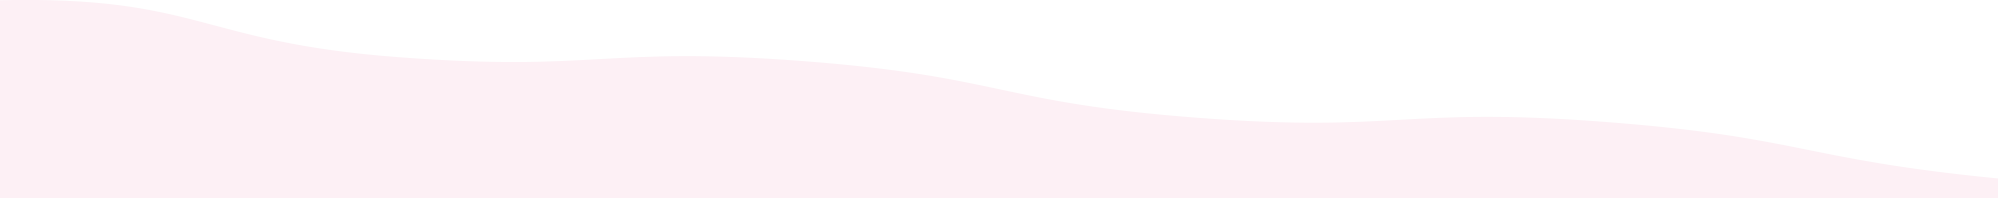 edge_pink01